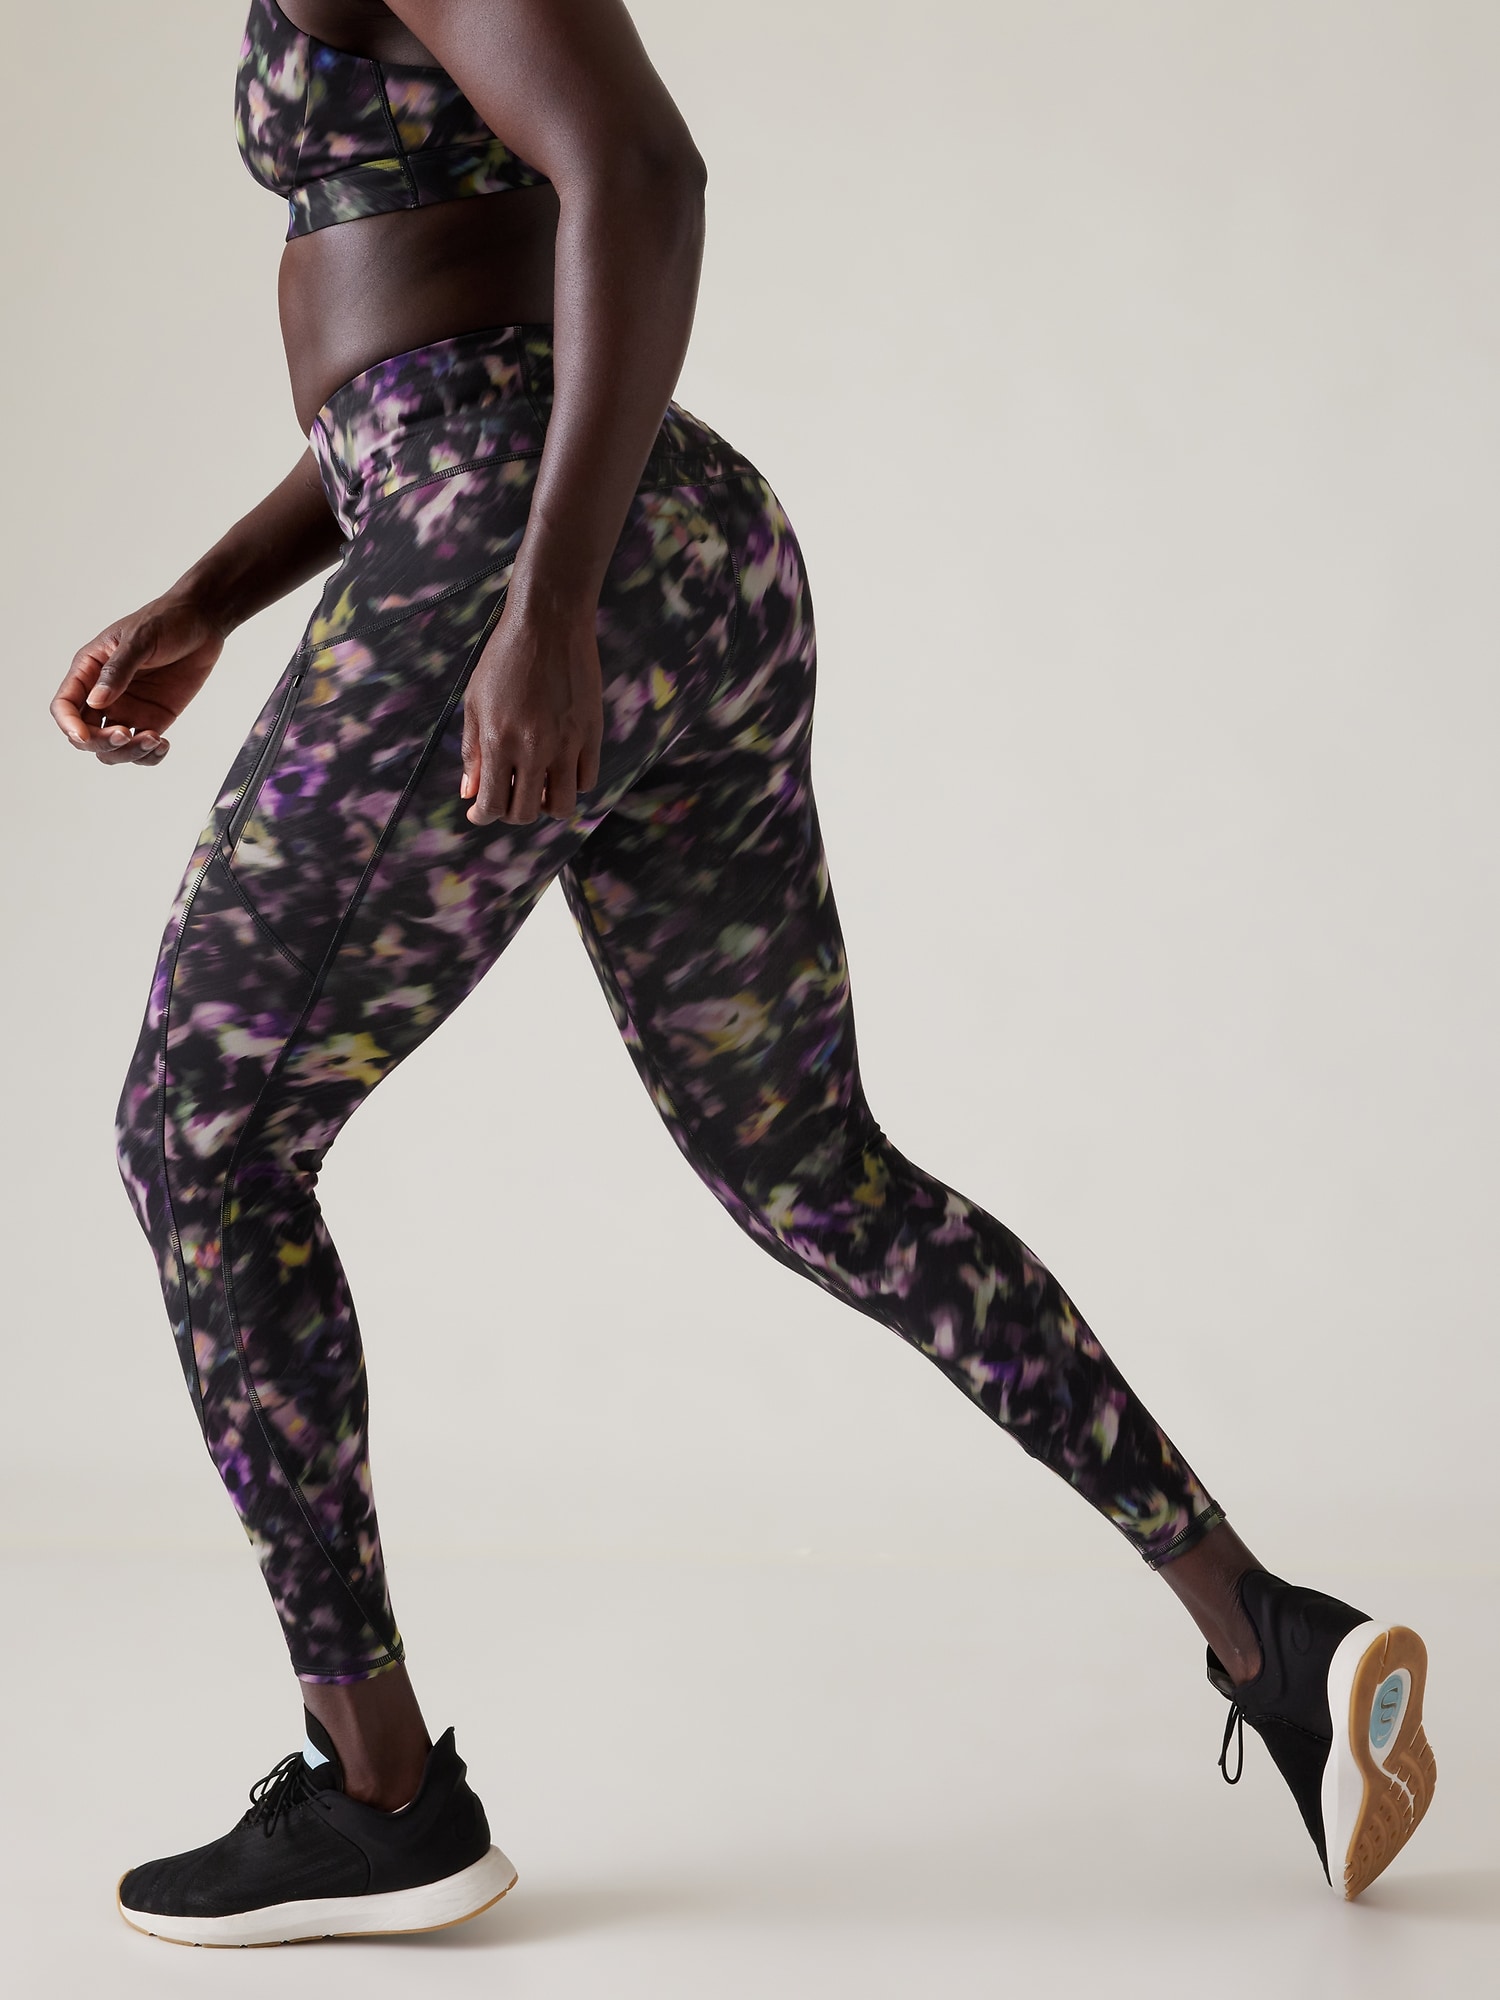 Athleta Rainier Reflective Tight Women's Black Camo Lux Leggings Size XL -  Athletic apparel